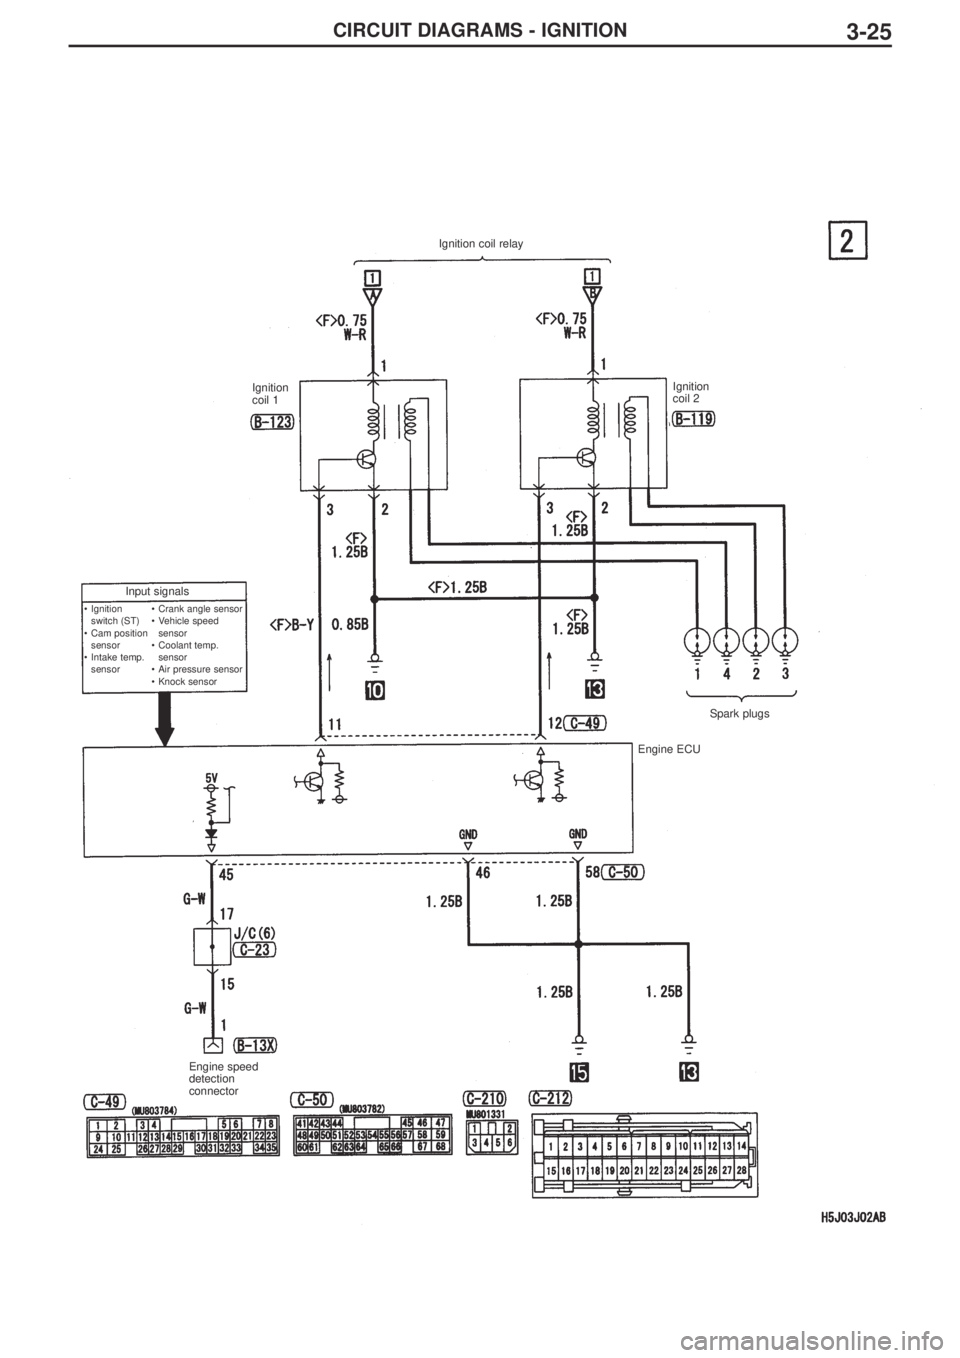 MITSUBISHI LANCER EVOLUTION IX 2005  Workshop Manual CIRCUIT DIAGRAMS - IGNITION3-25
Ignition coil relay
Ignition
coil 1Ignition
coil 2
Input signals
•Crank angle sensor 
•Vehicle speed
sensor
•Coolant temp.
sensor
•Air pressure sensor
•Knock 